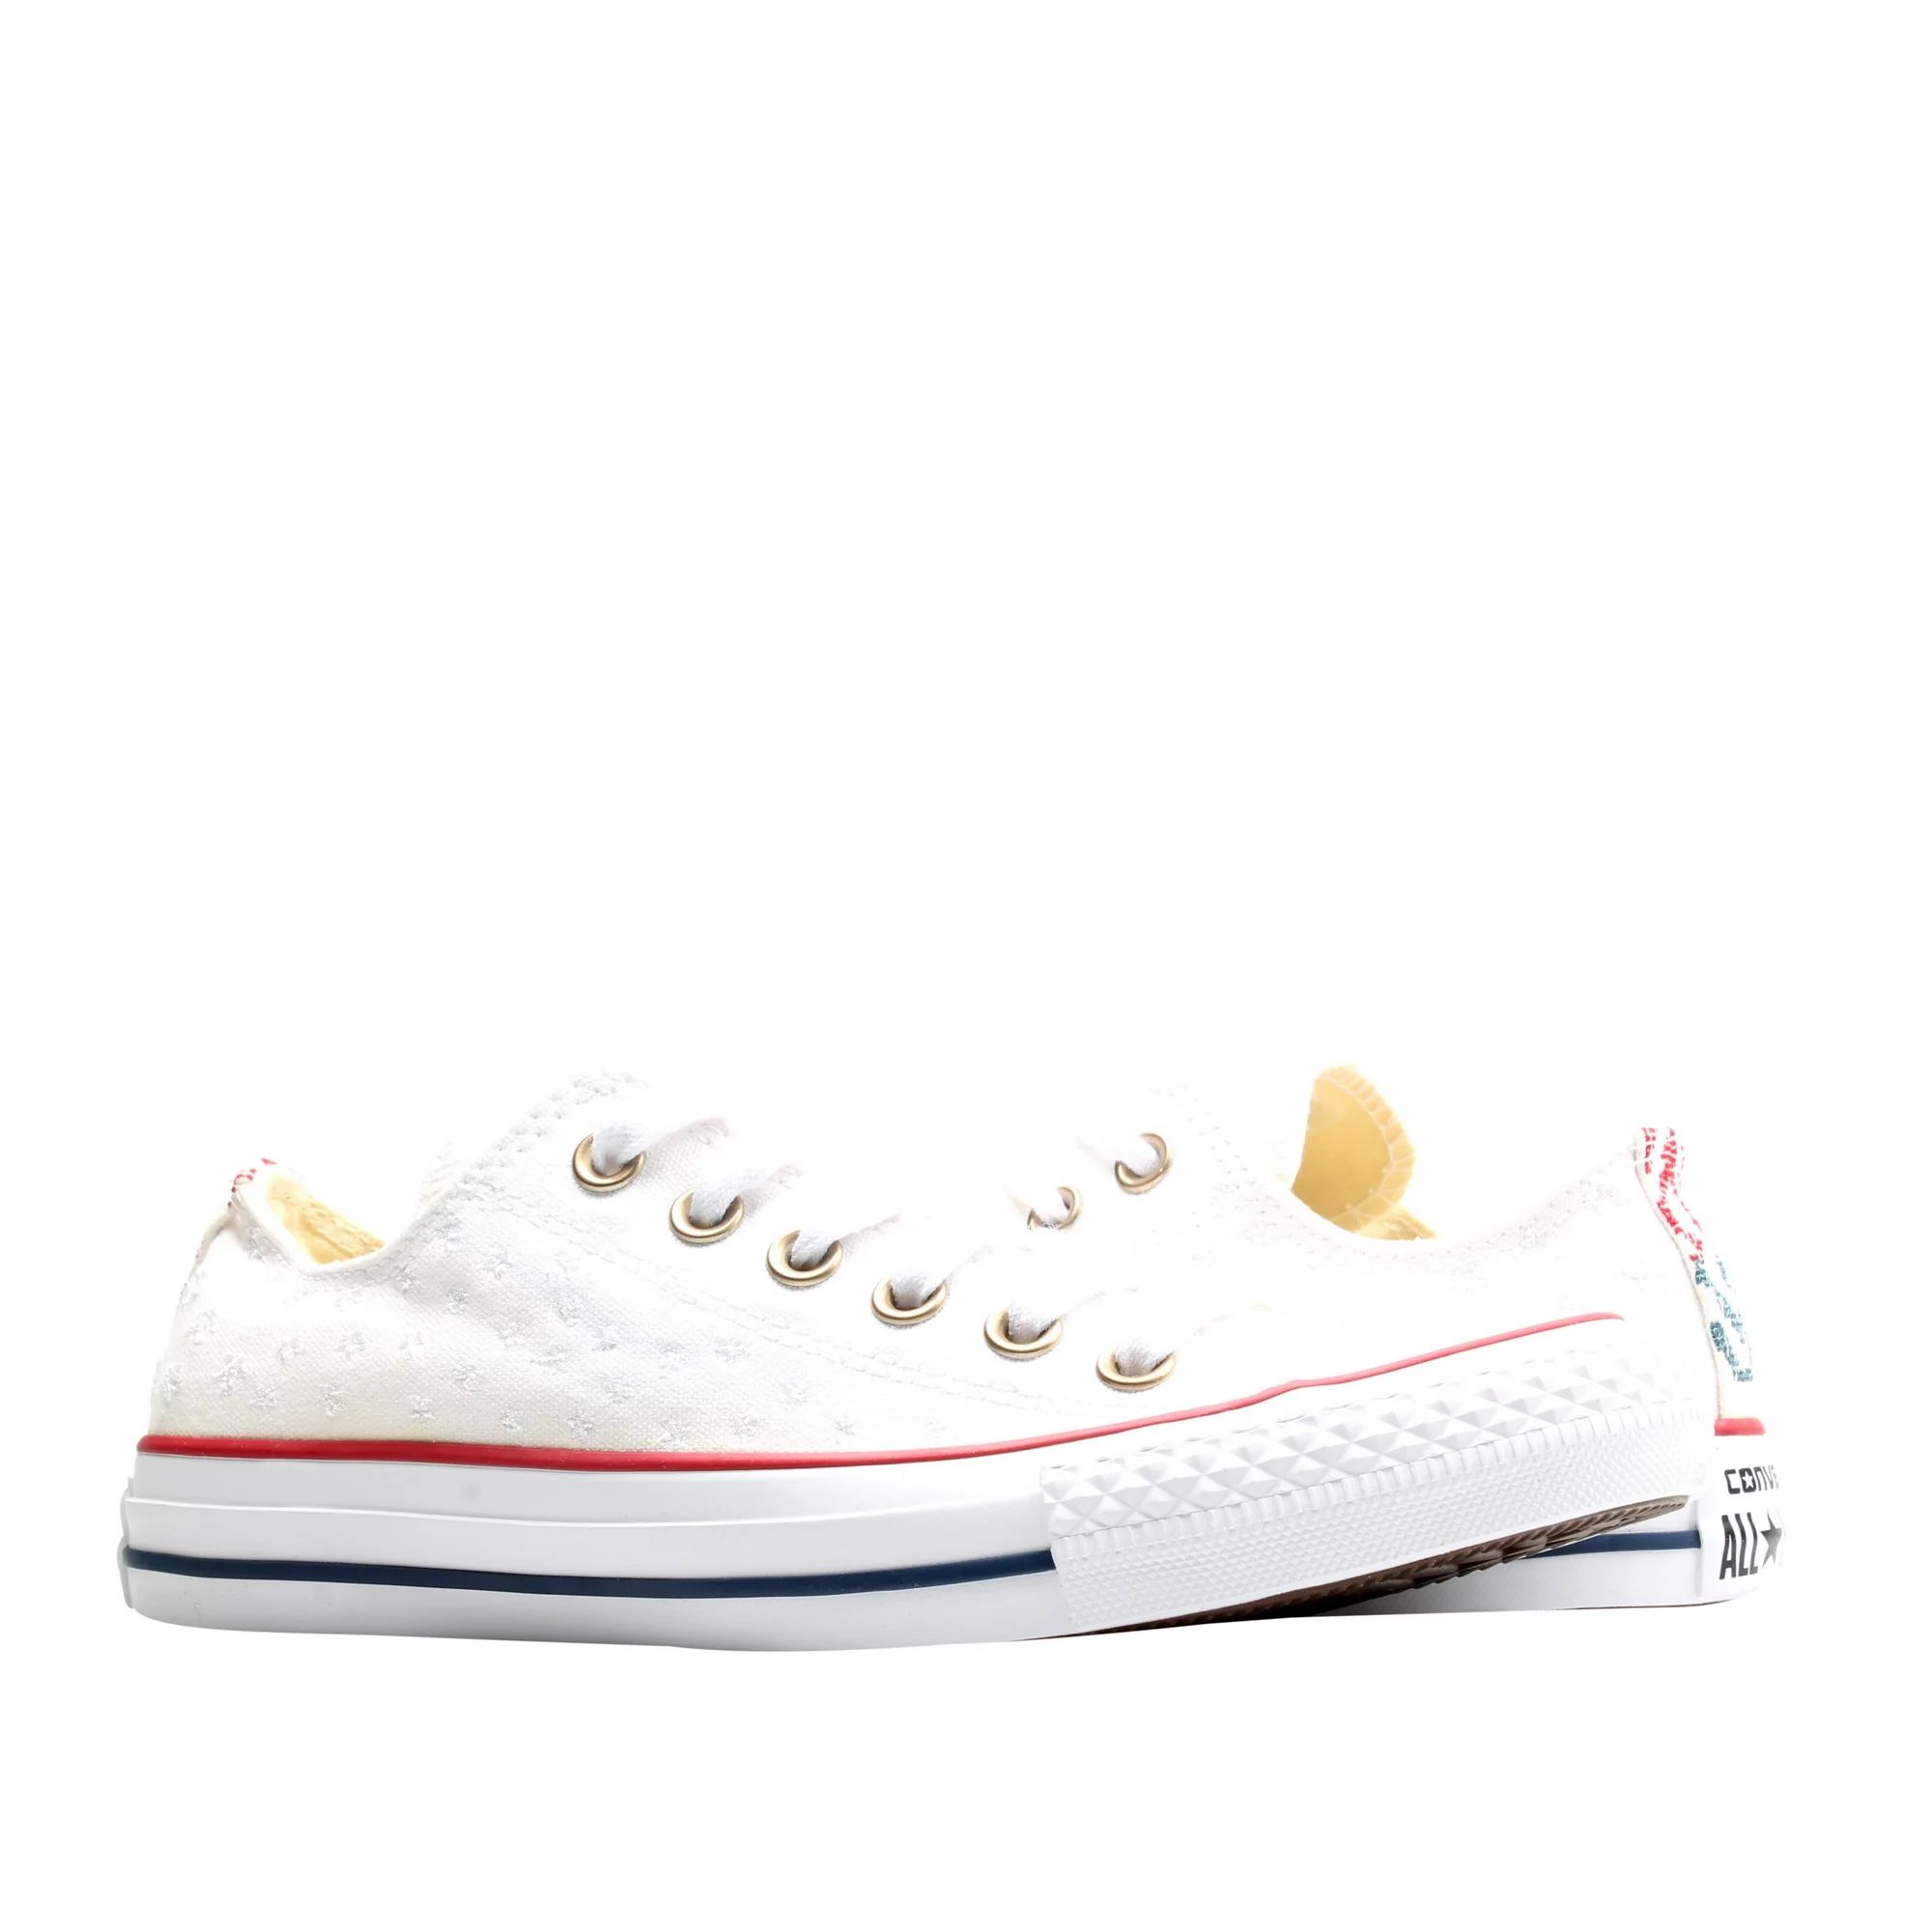 Converse Chuck Taylor All Star Ox Stitch Stars White Women's Sneakers 555882C | Walmart (US)